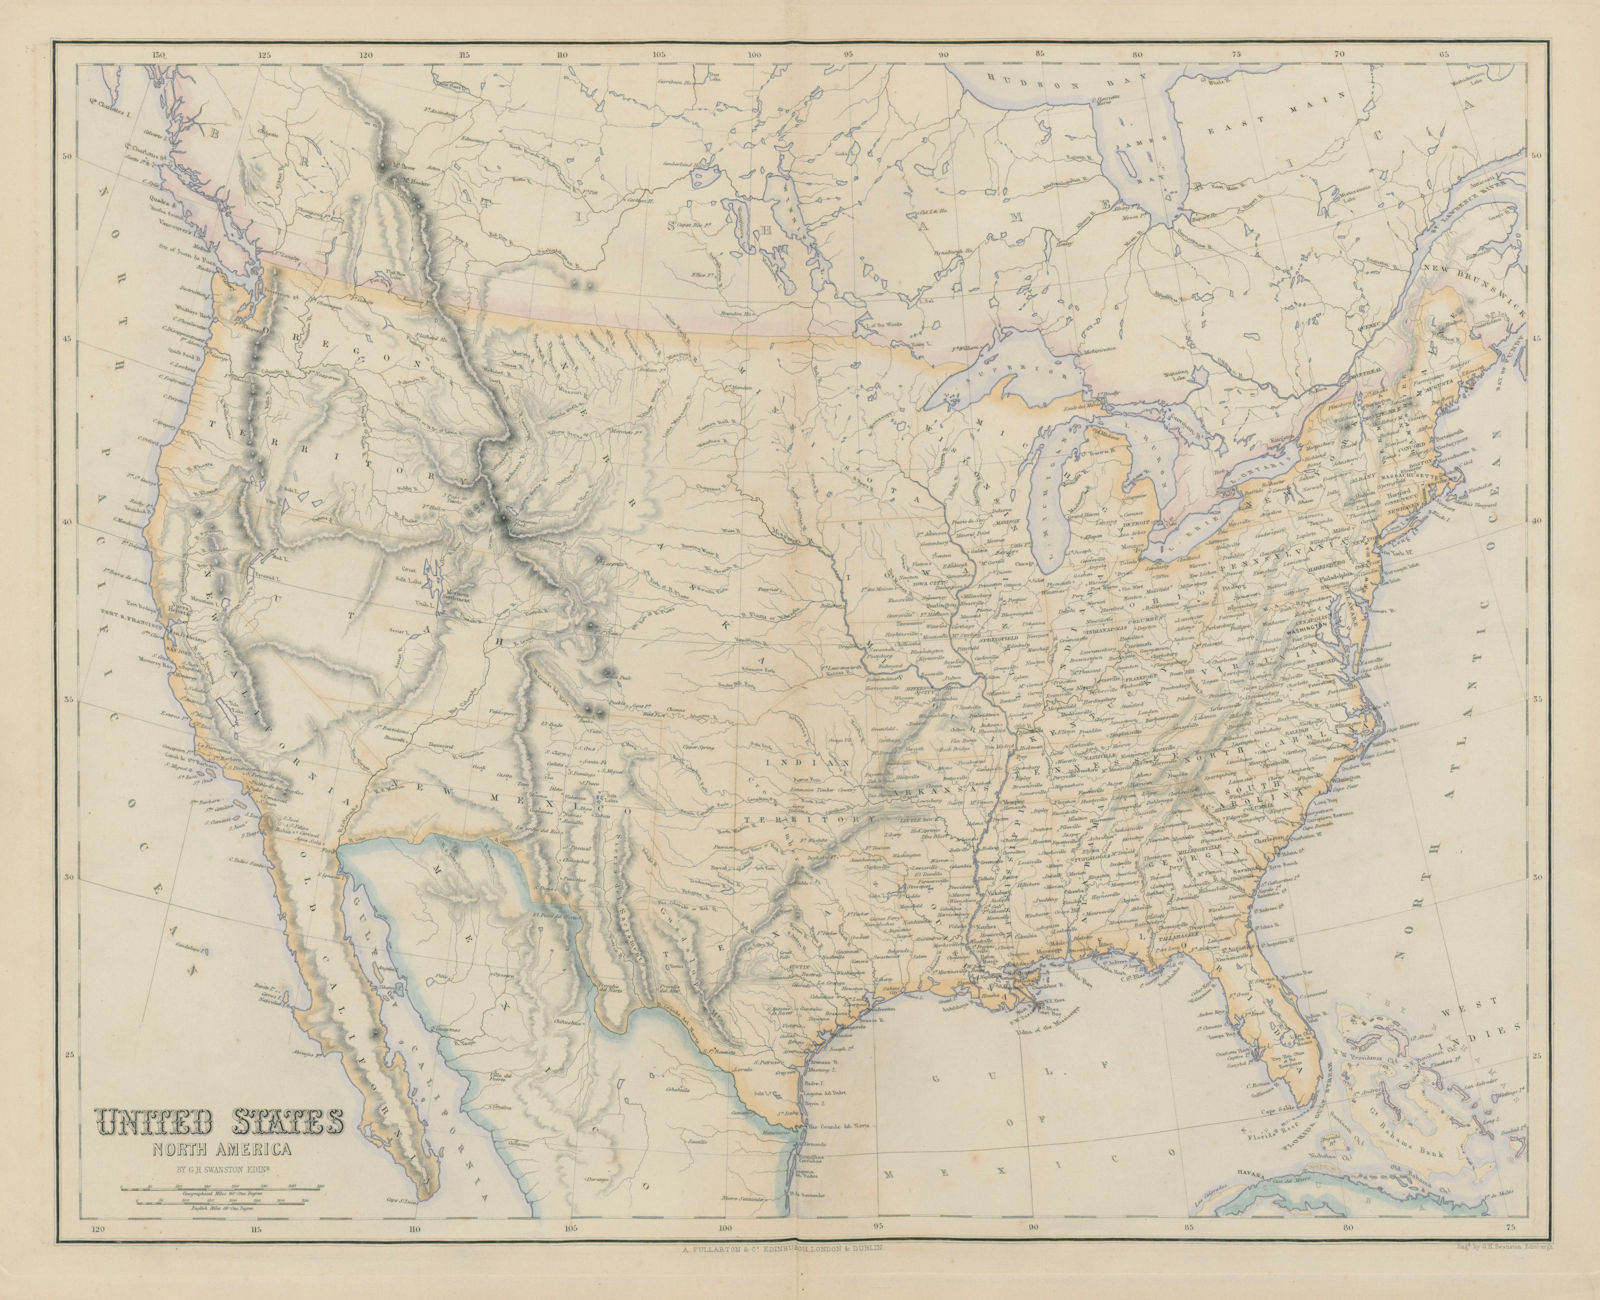 United States. "New California". Oregon Territory. SWANSTON 1860 old map